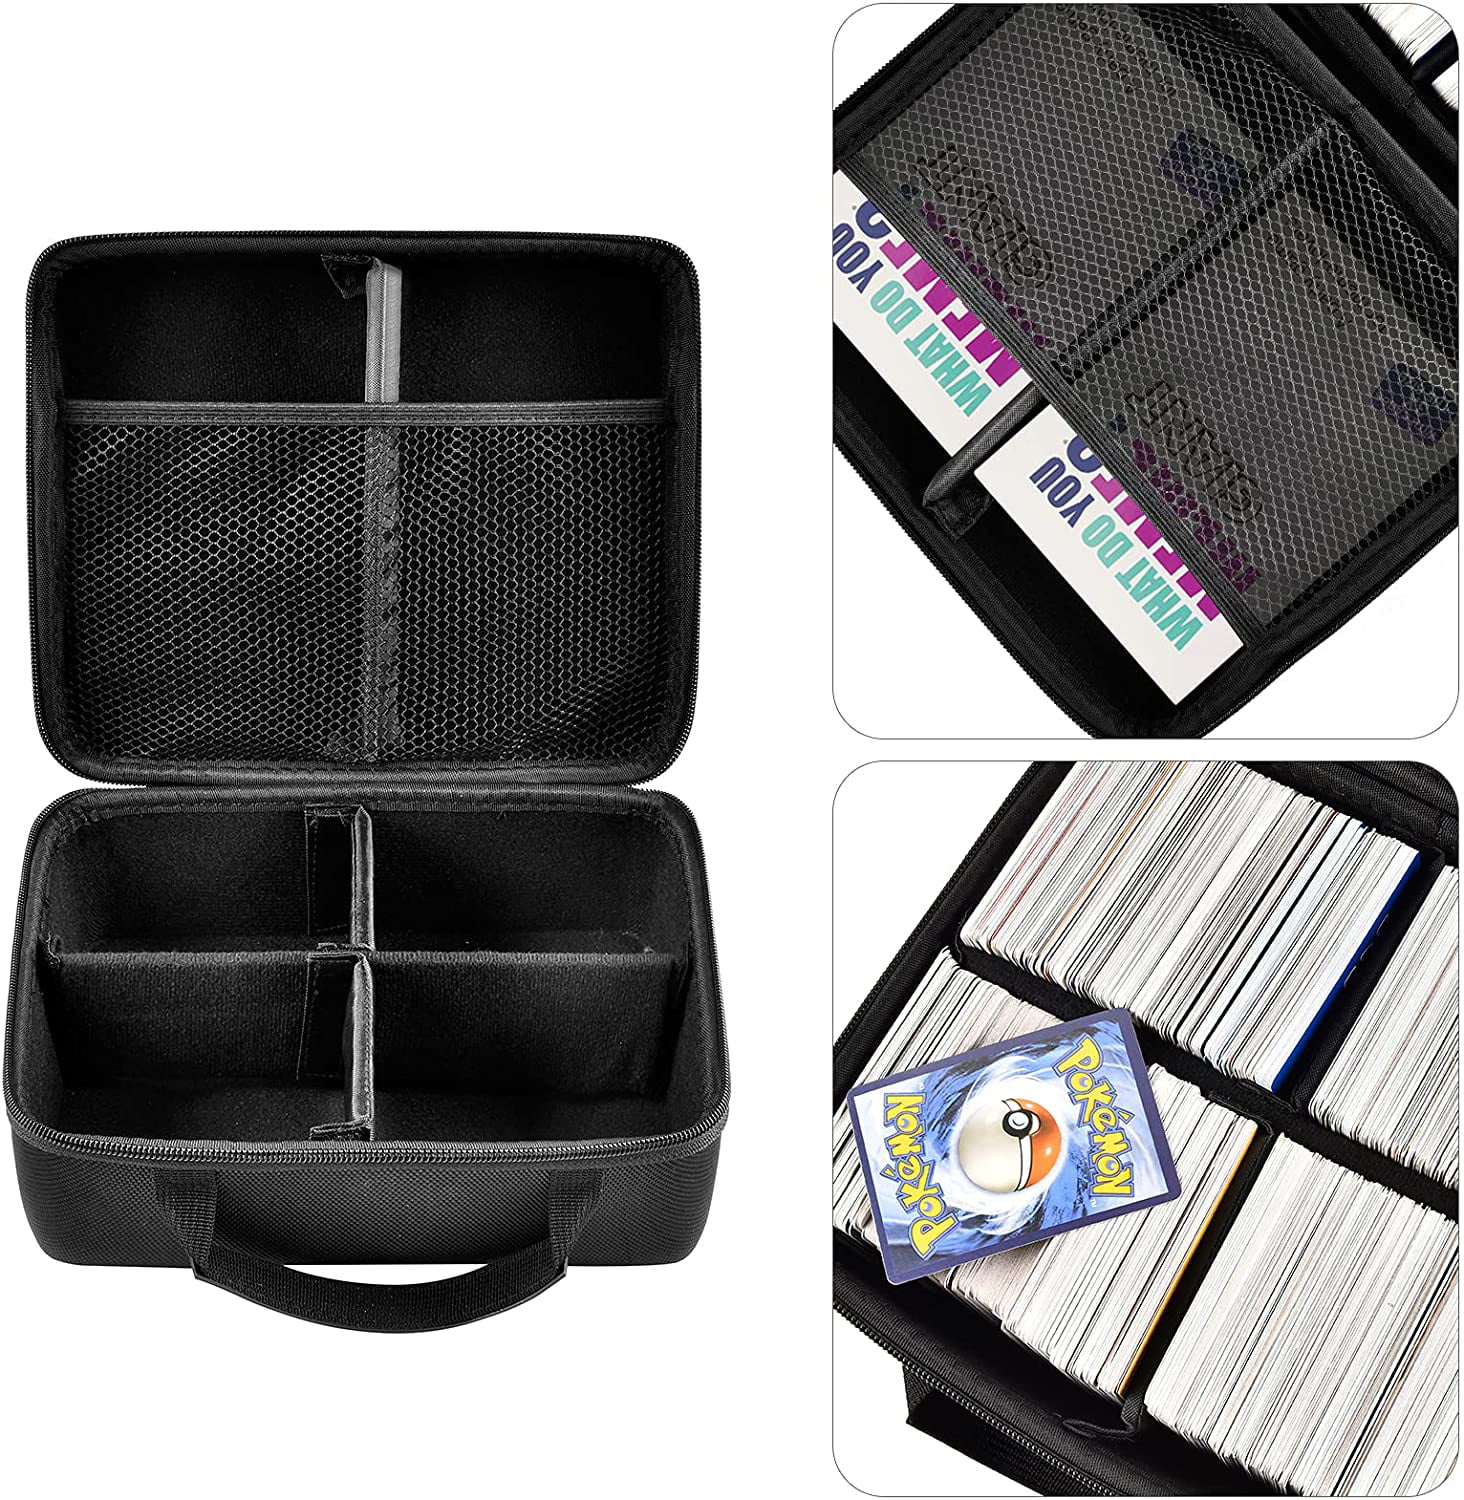 Portable Ultra Pro Deluxe Card Carrying Case Bag Bundle Black Dragon & Magic The Gathering Card Sleeves Black Lotus Design